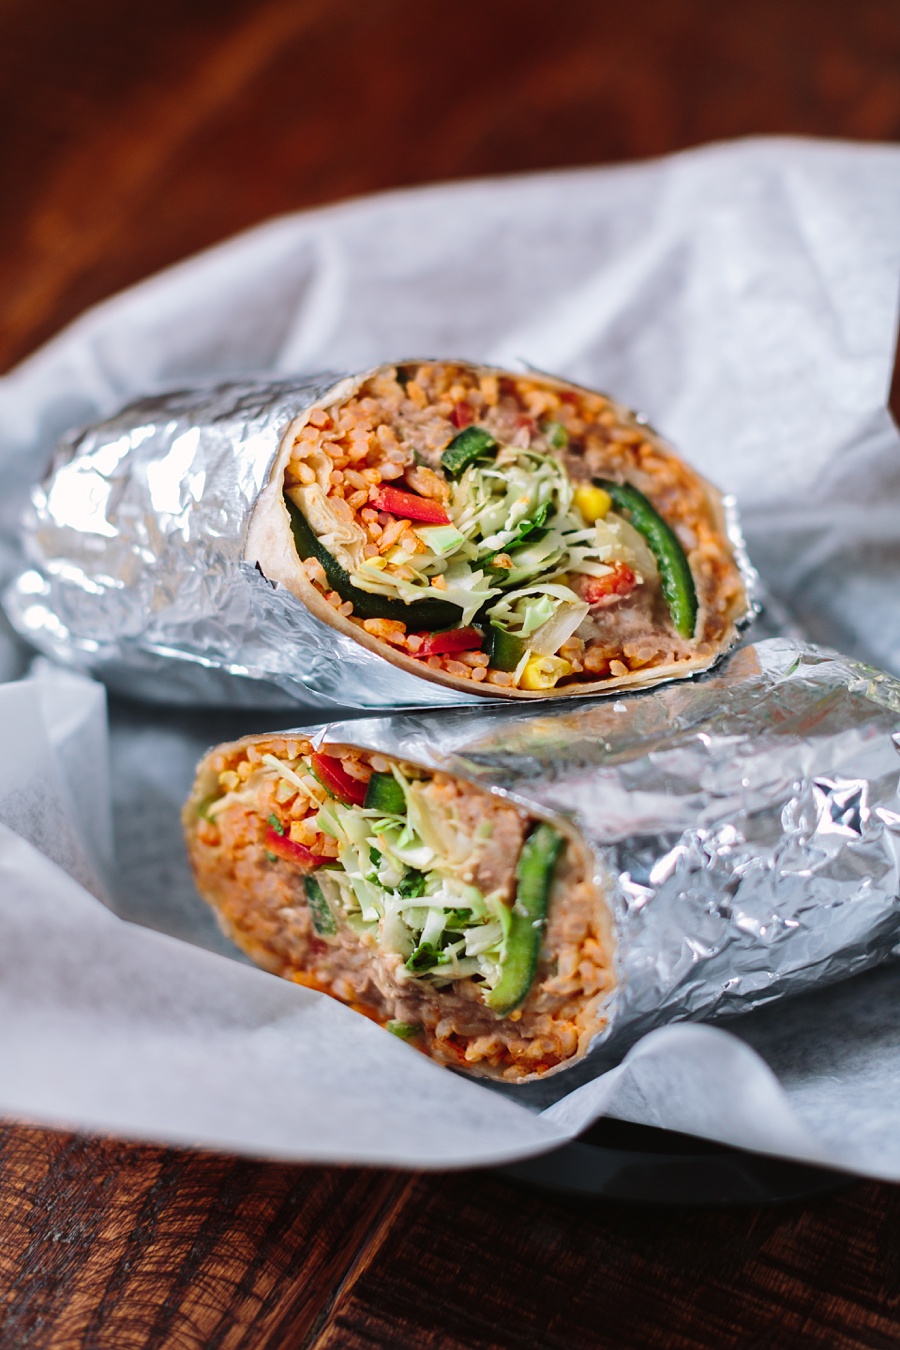 Vegan burrito in tray from Spanglish